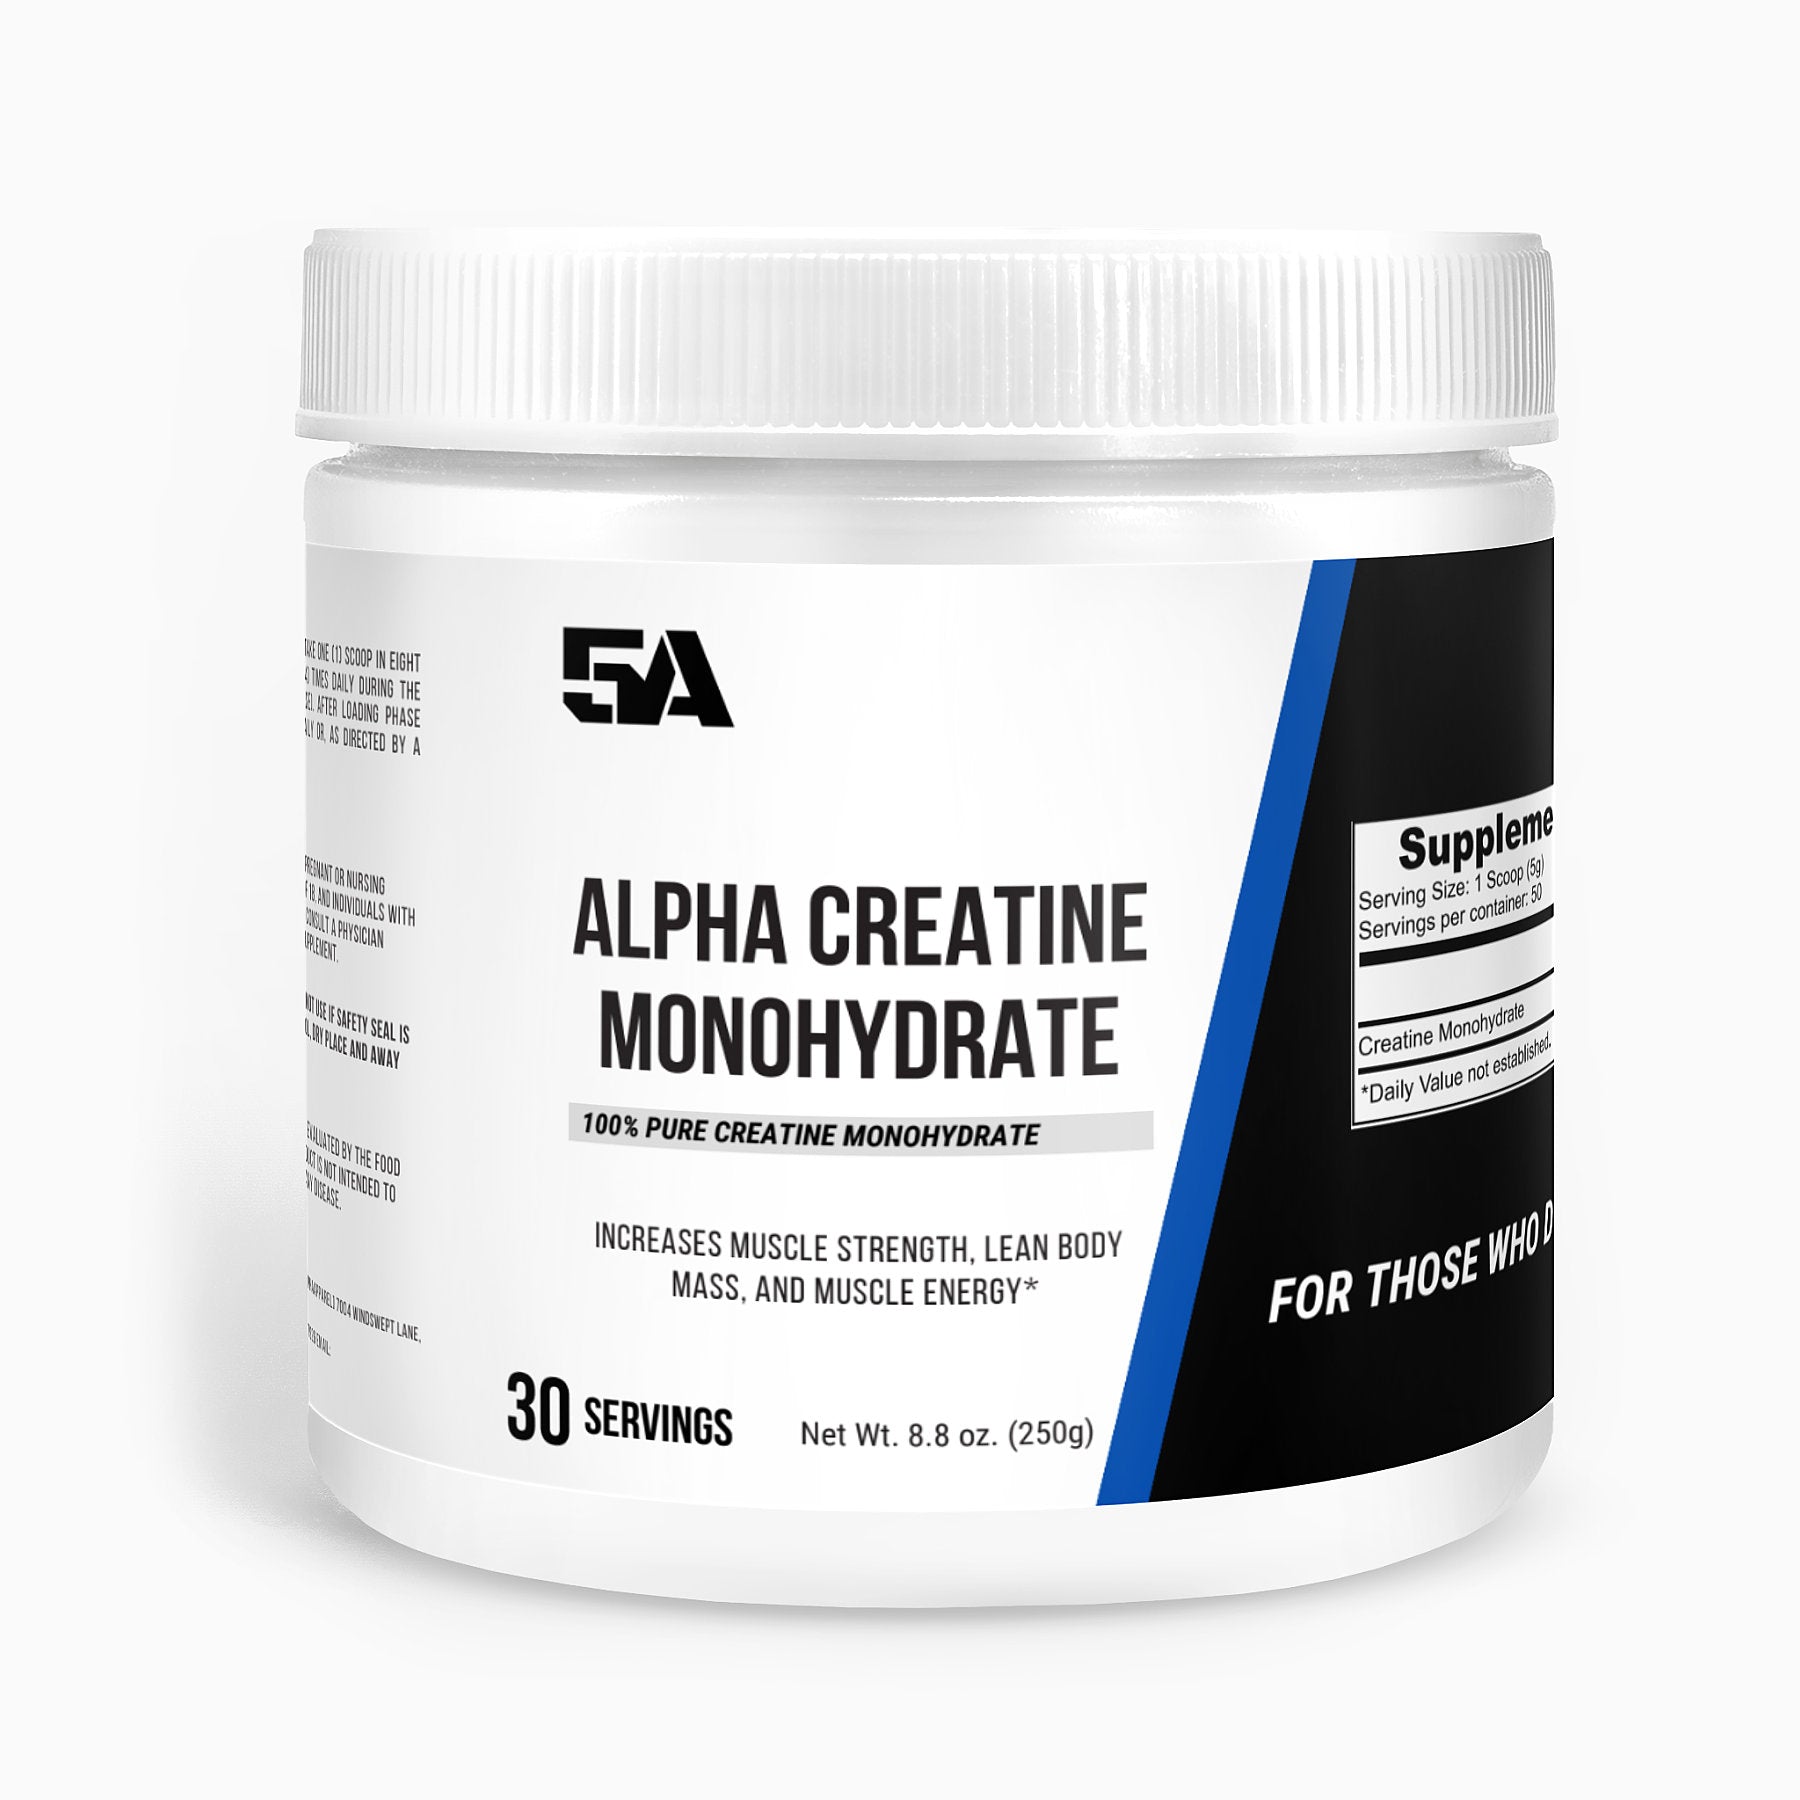 ALPHA Creatine Monohydrate